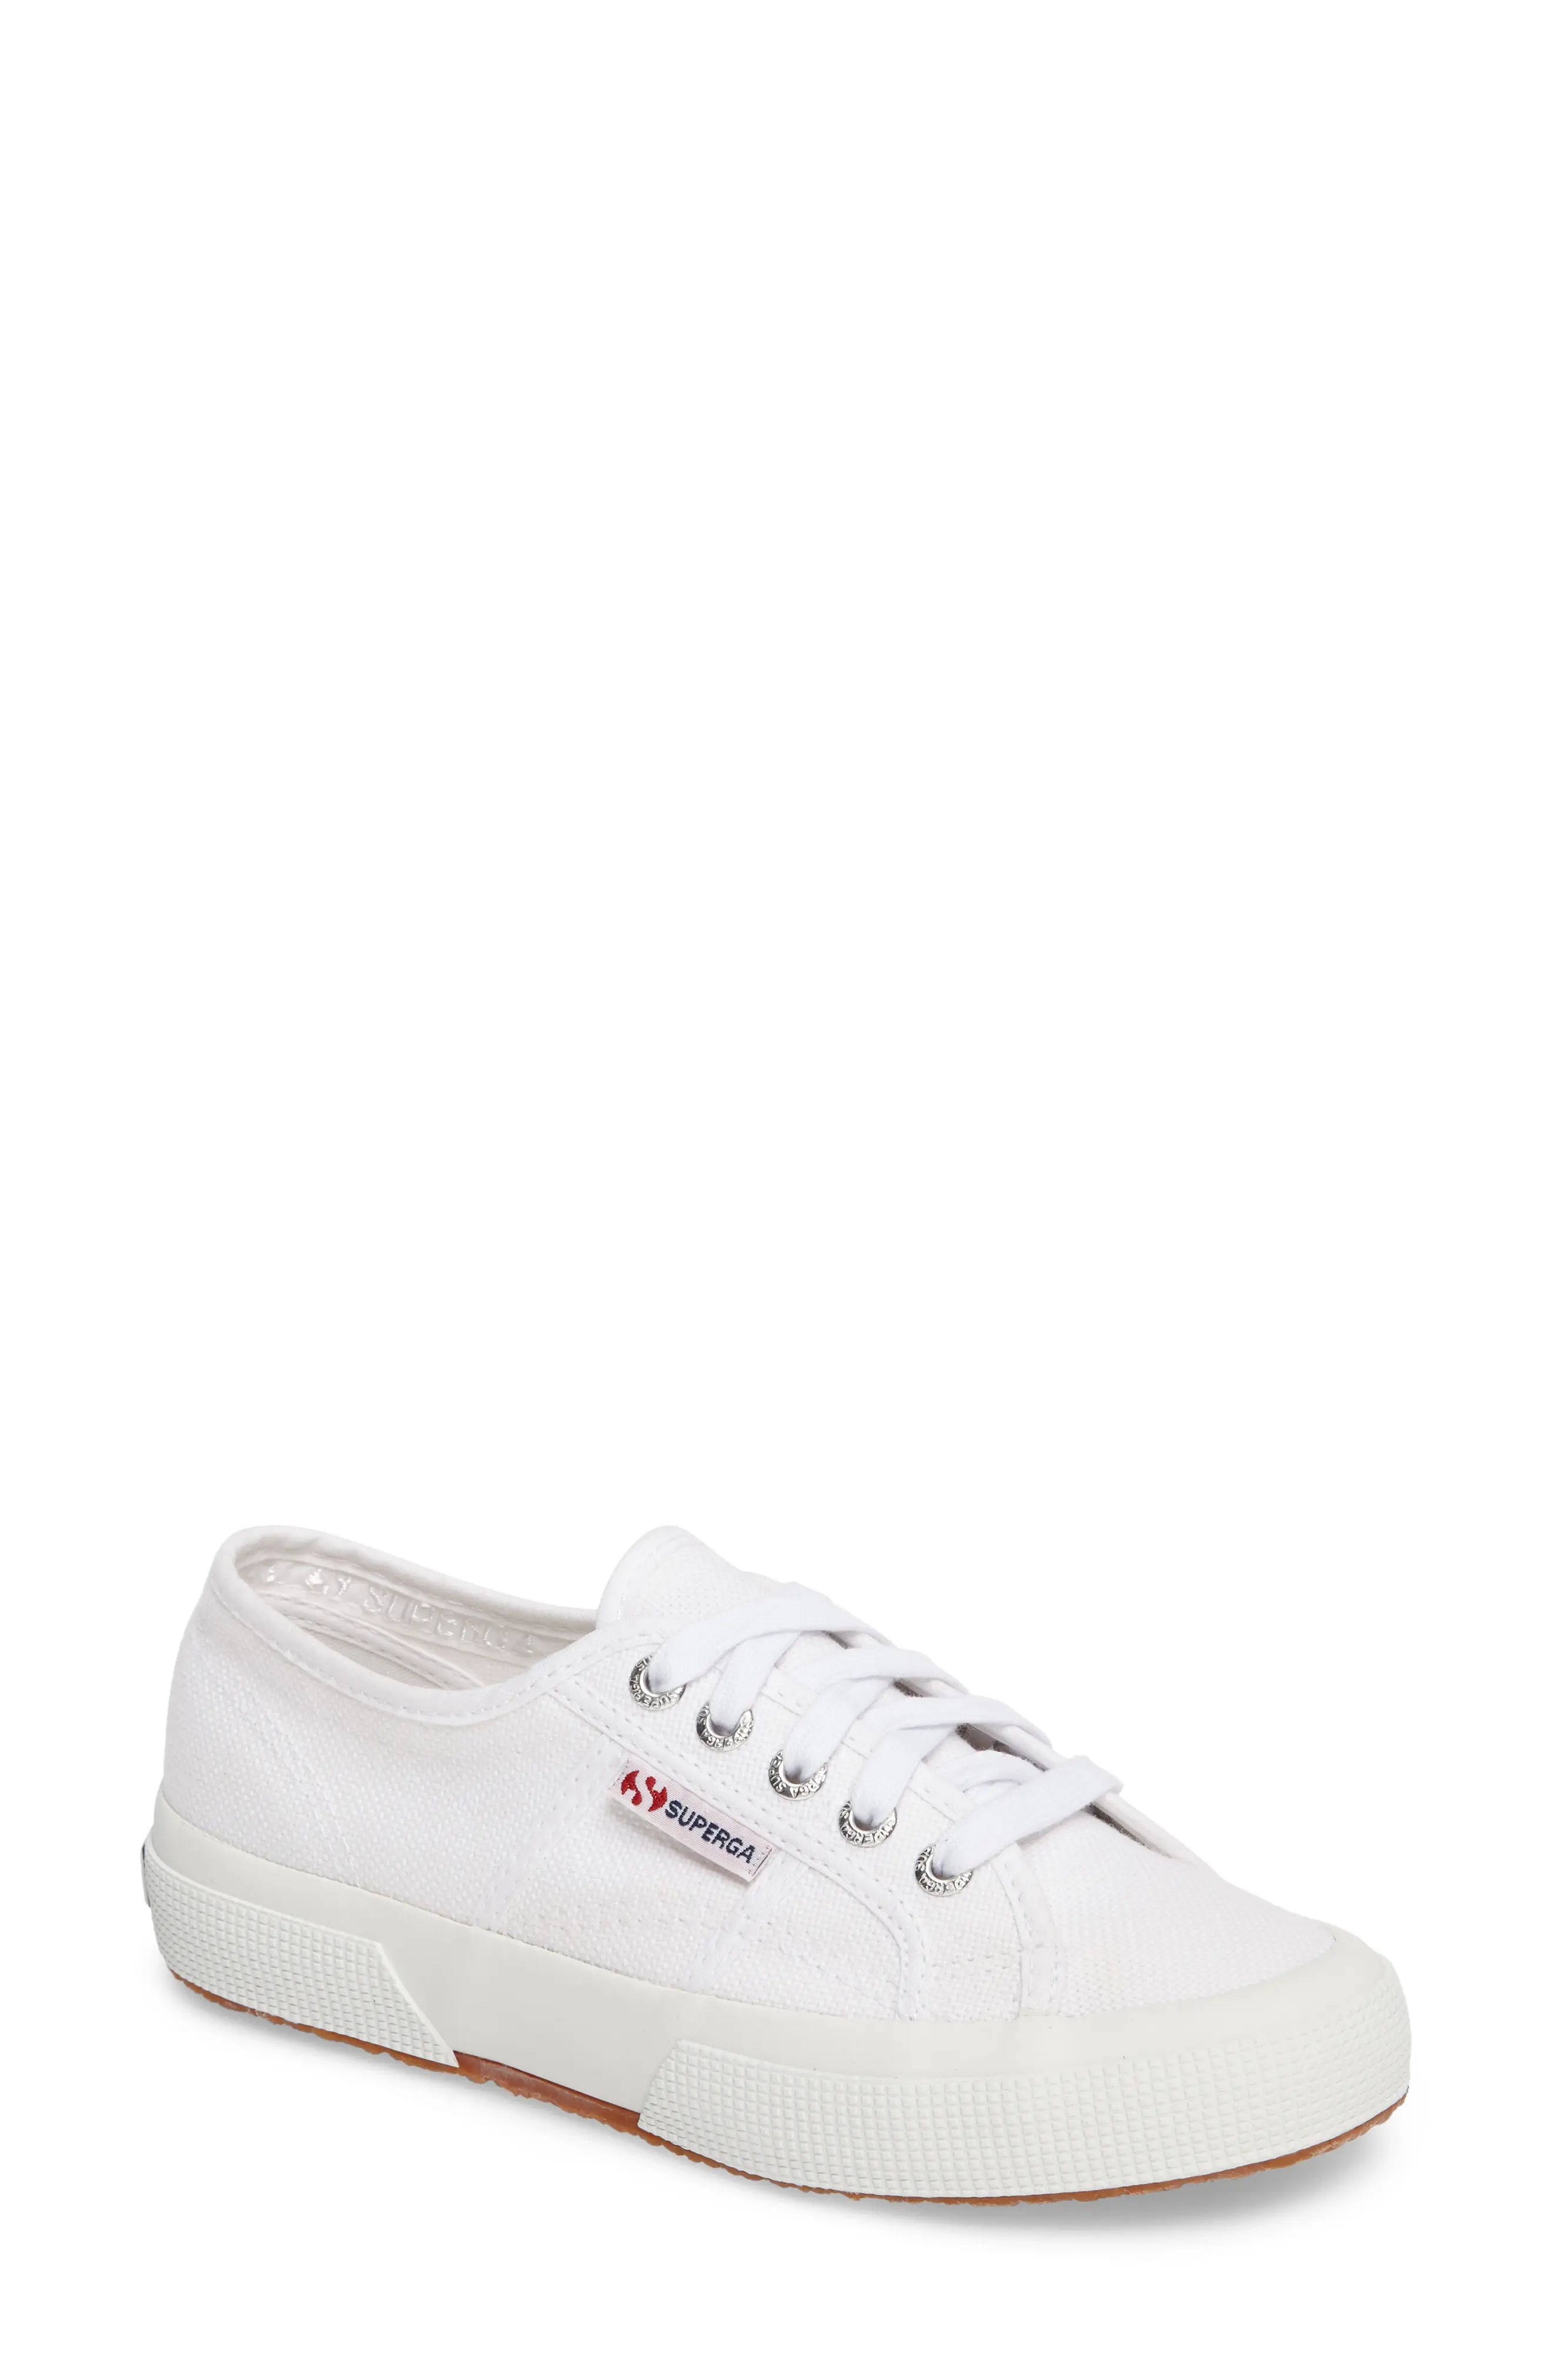 Superga Cotu Sneaker in White Canvas at Nordstrom, Size 8Us | Nordstrom